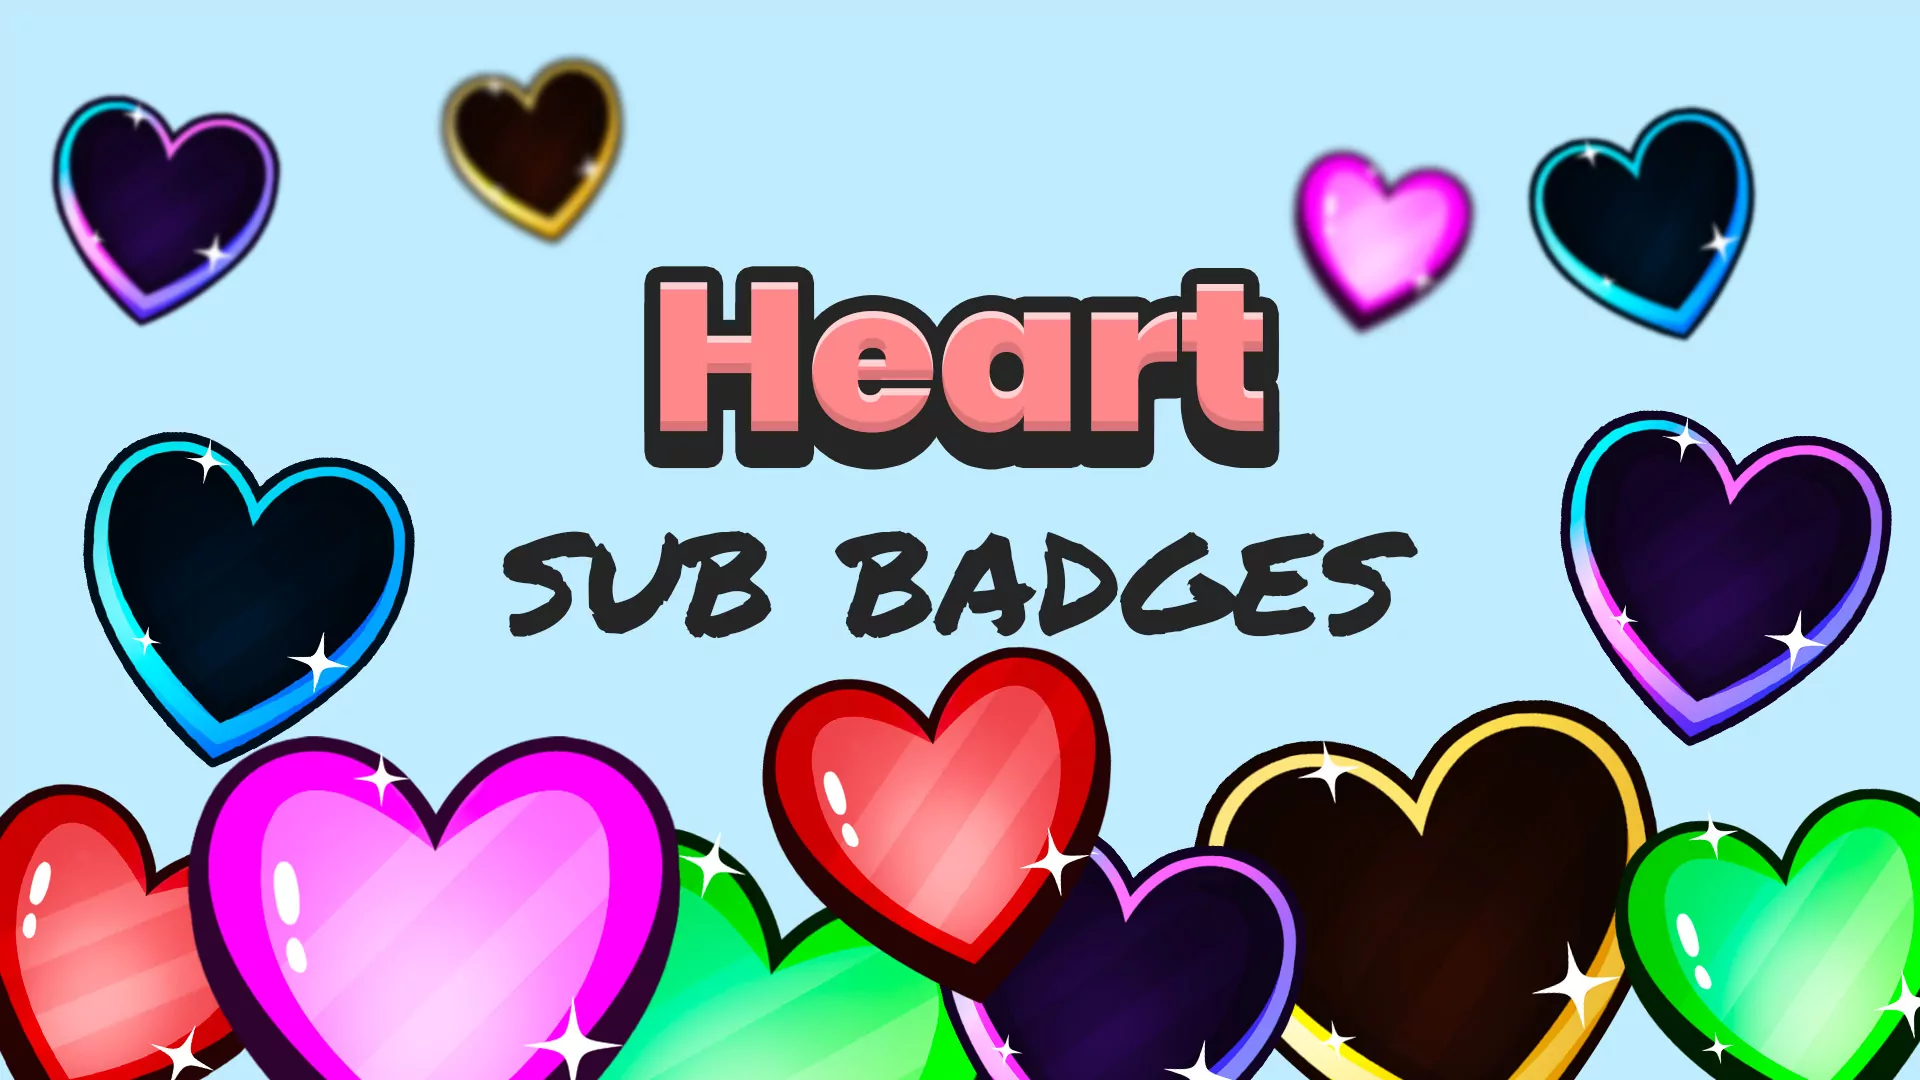 Heart Sub Badges - Main Image